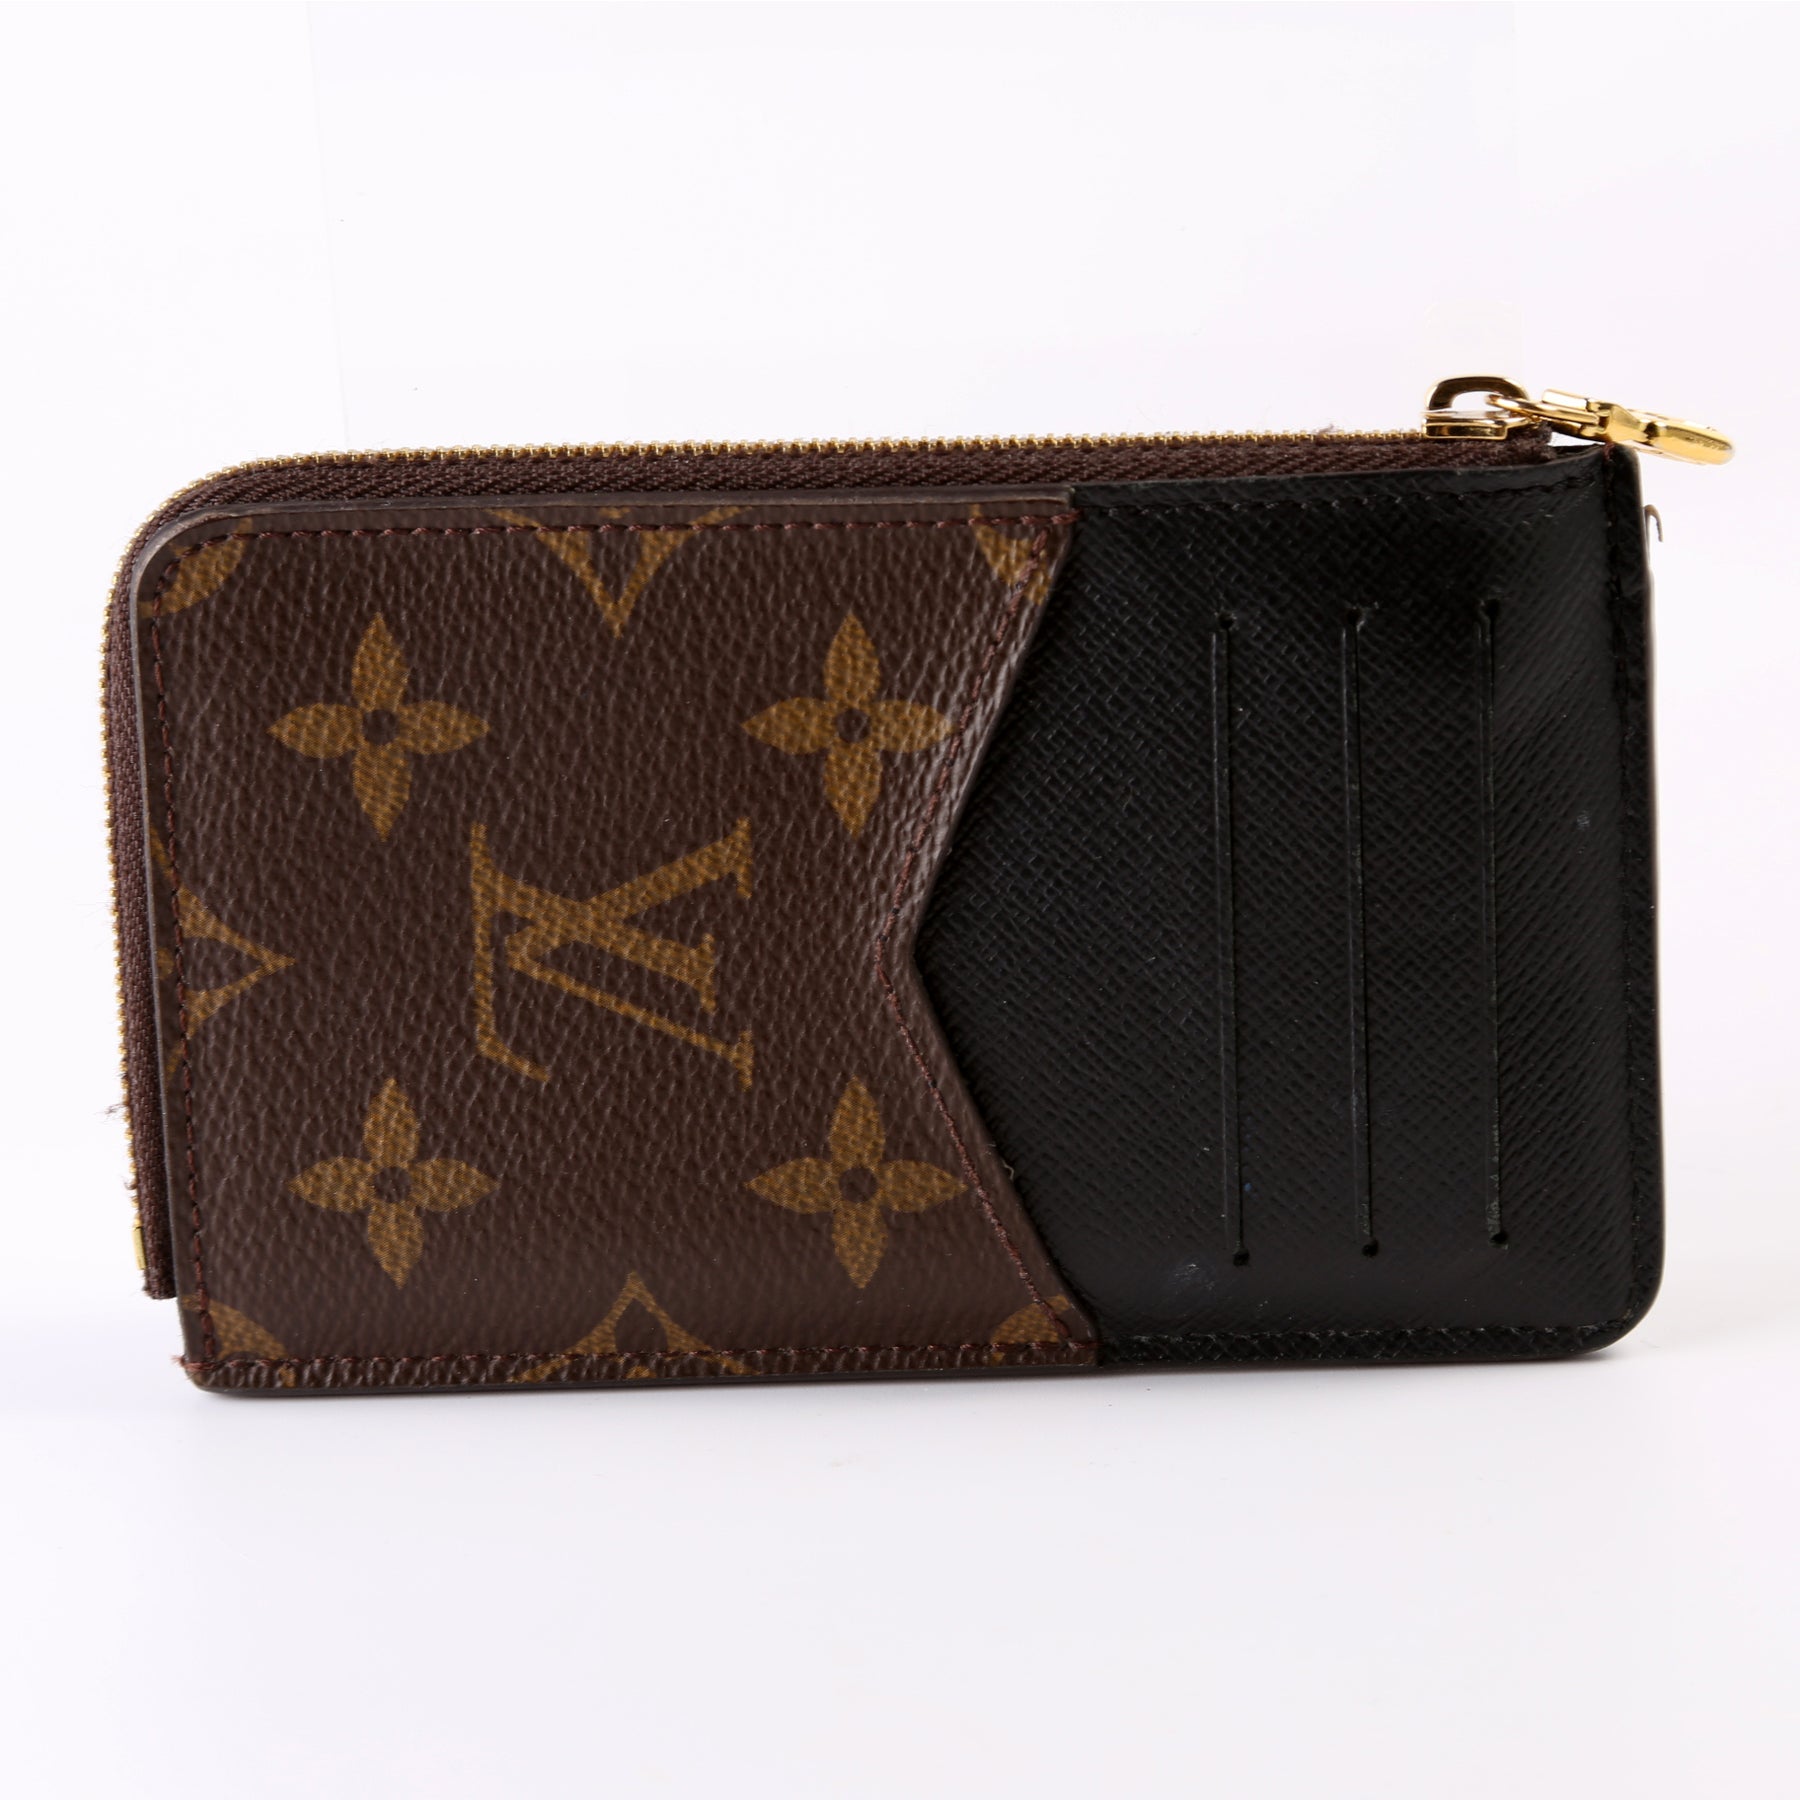 Shop Louis Vuitton MONOGRAM Card holder recto verso (M69431) by